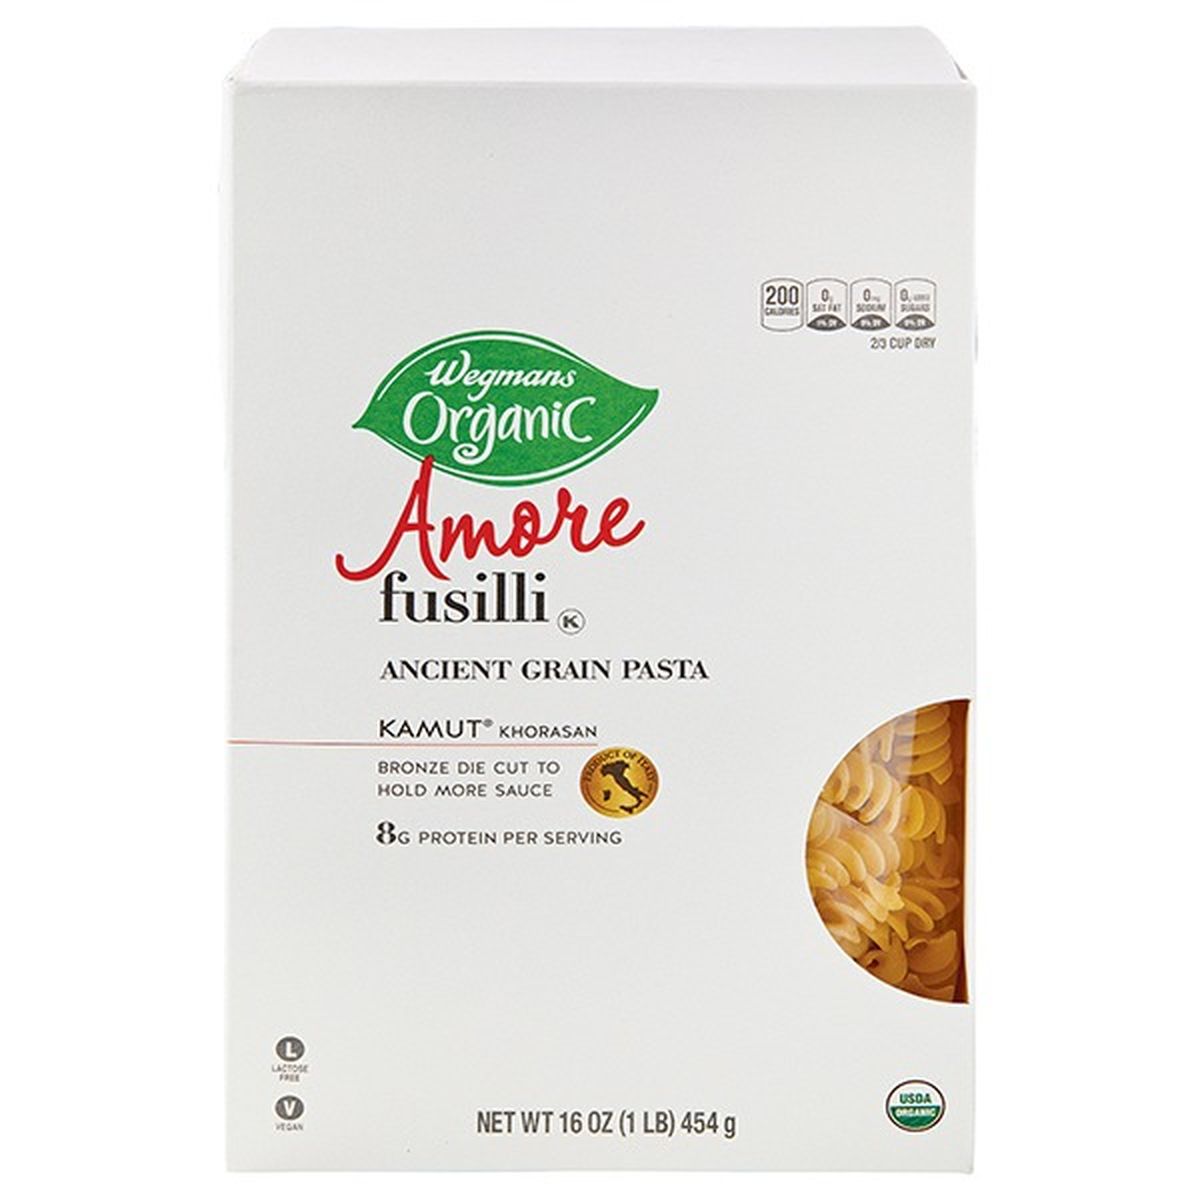 Calories in Wegmans Organic Amore Fusilli, Ancient Grain Pasta, KAMUTs Khorasan